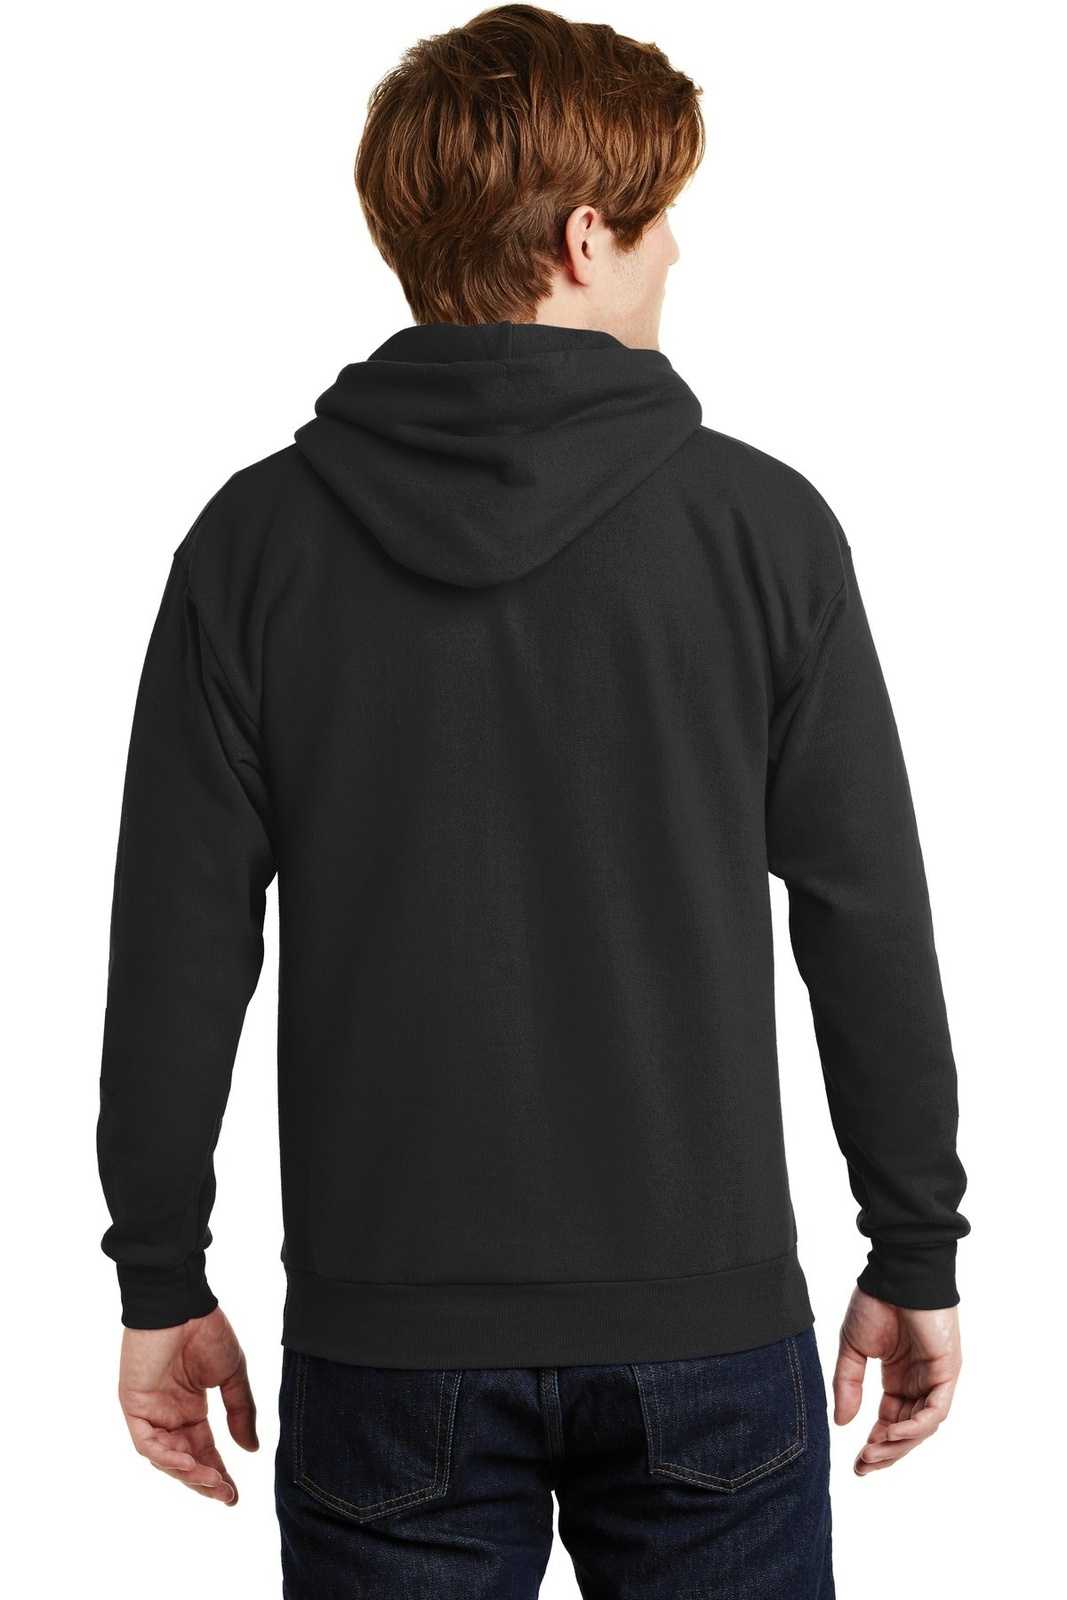 Hanes P170 Ecosmart Pullover Hooded Sweatshirt - Black - HIT a Double